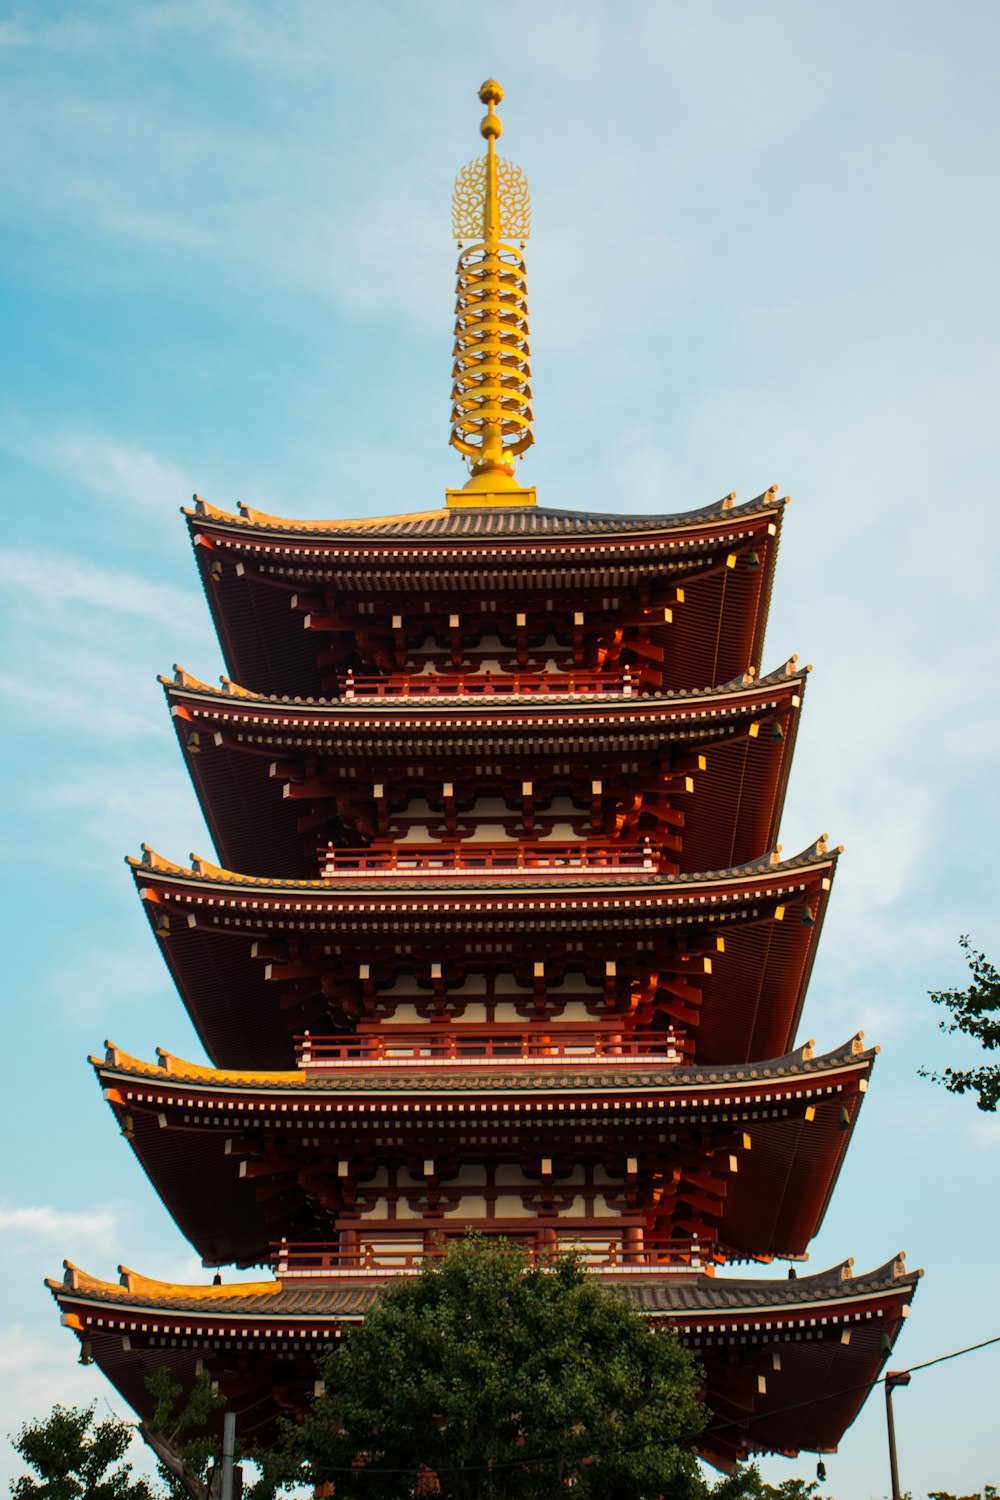 Sensō-ji Temple in Tokyo, Japan under blue and white skies during daytime